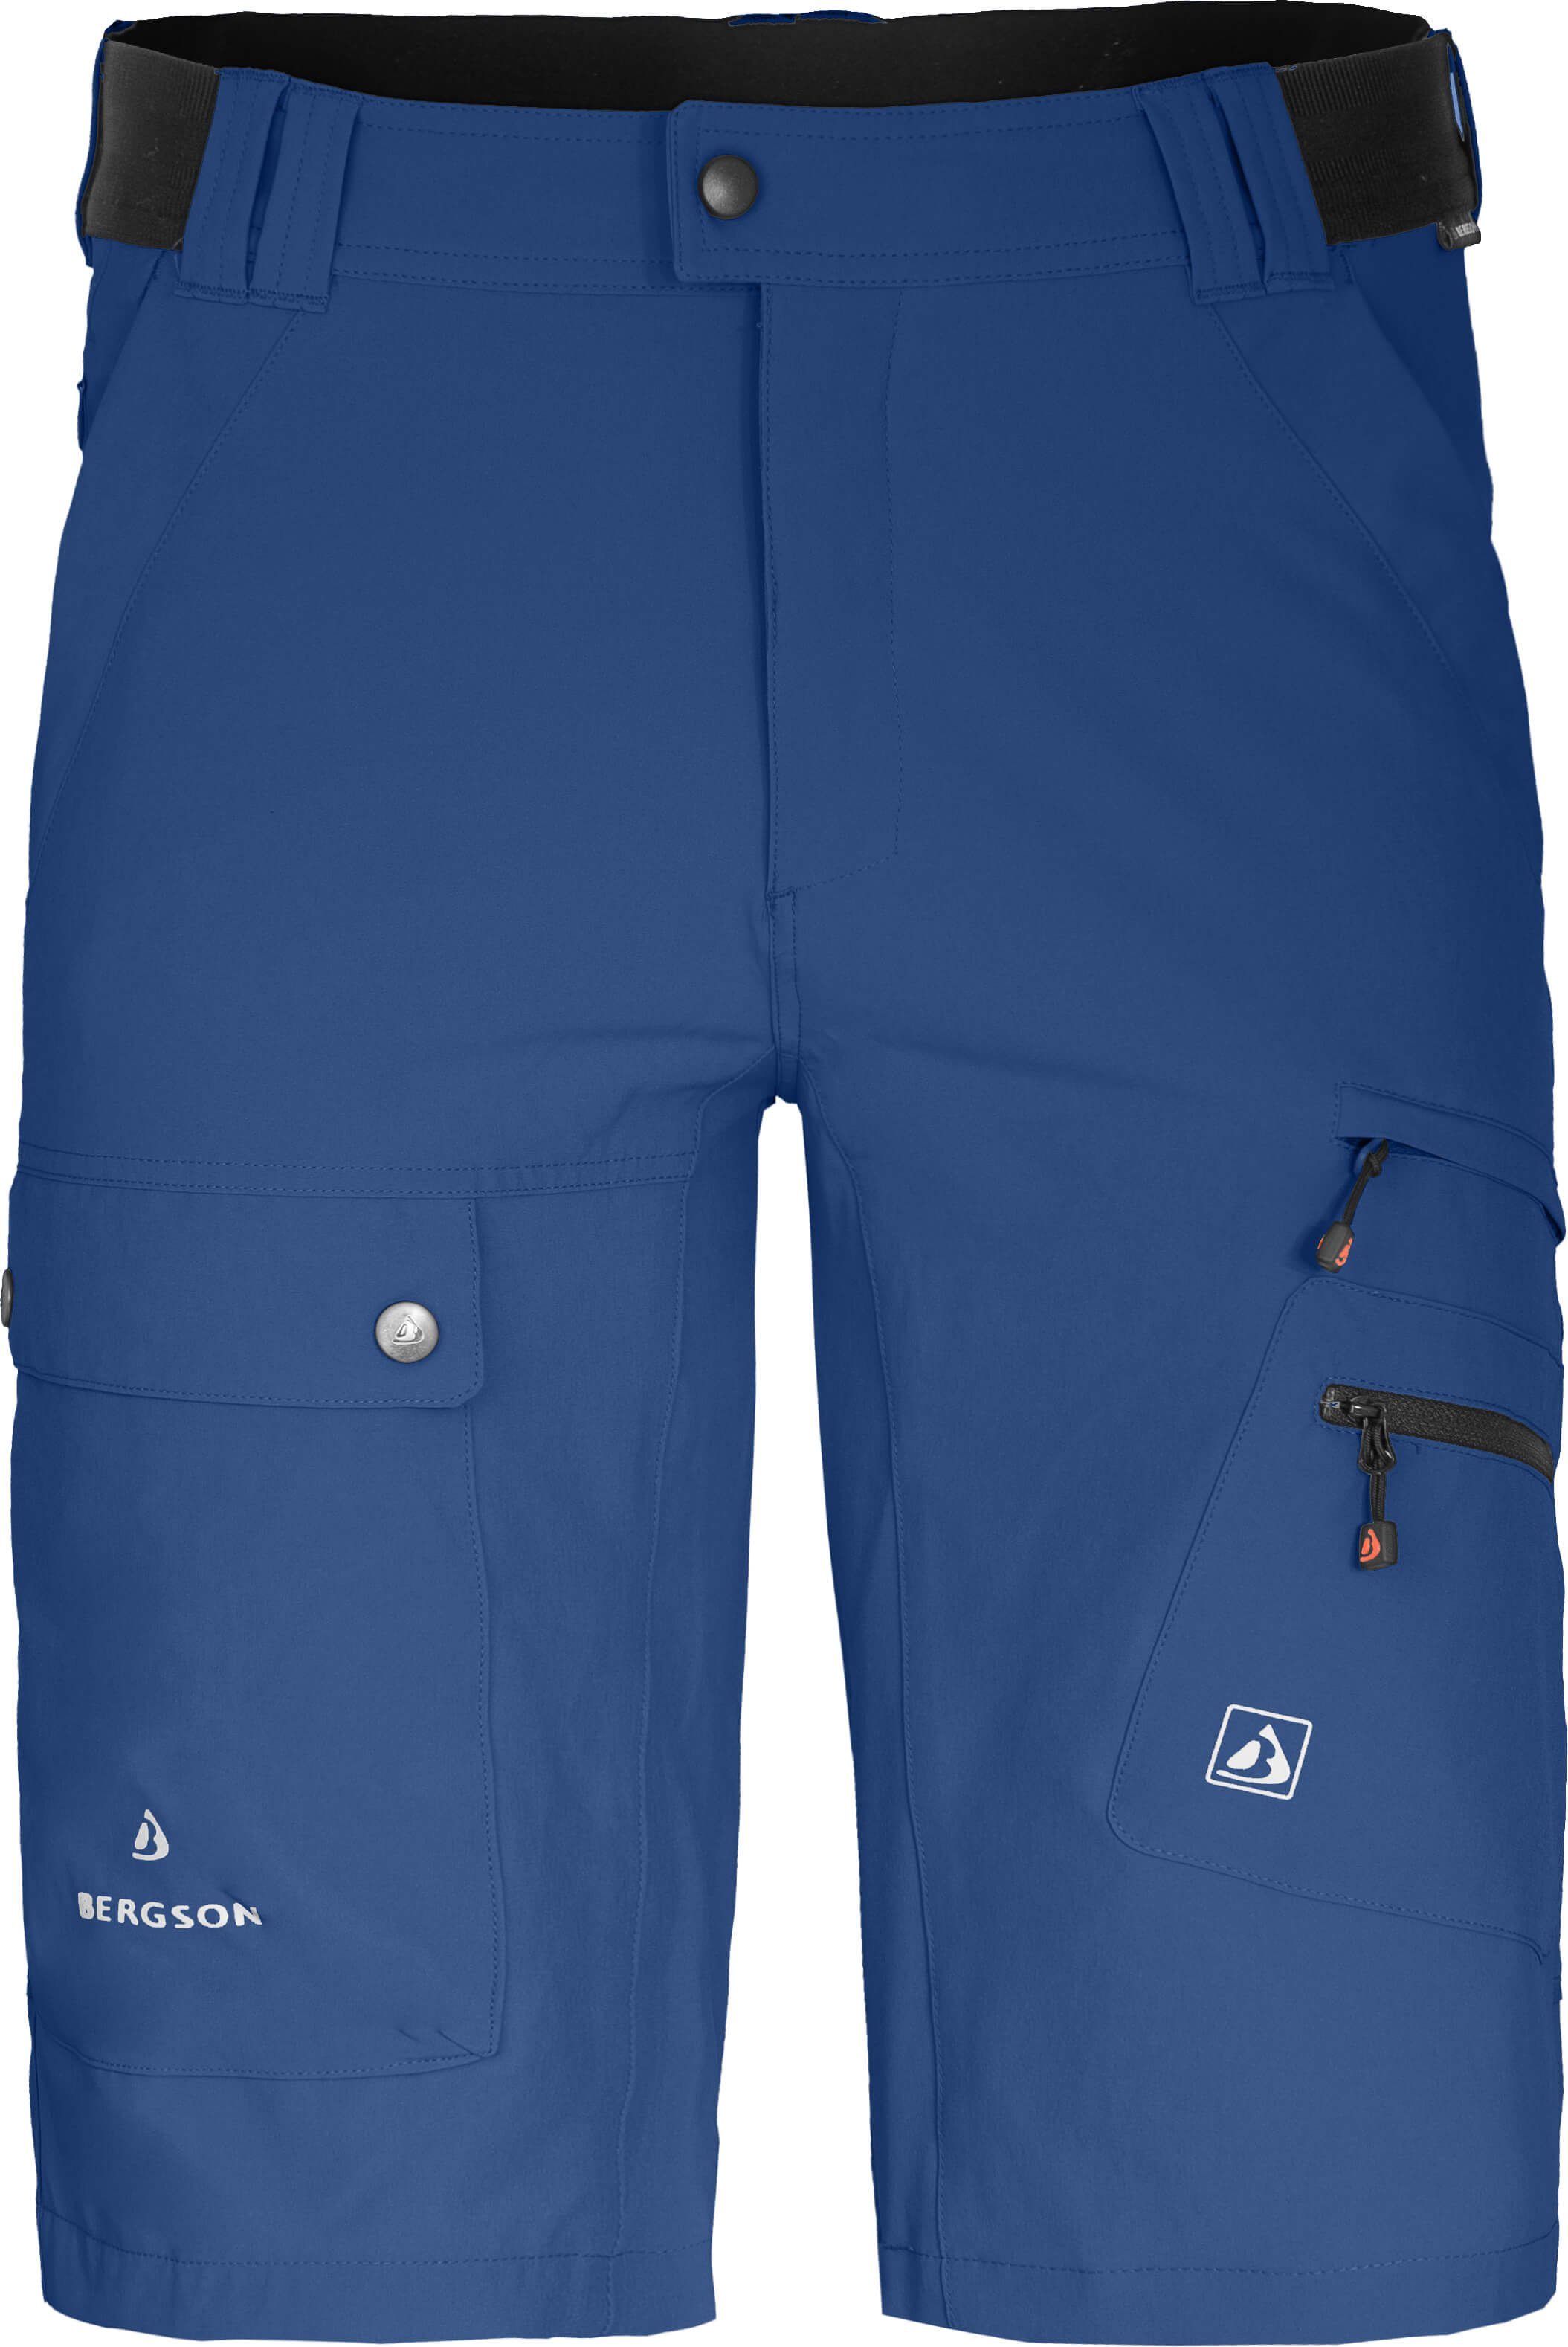 Bergson Outdoorhose FROSLEV COMFORT Bermuda Herren Wandershorts, recycelt, elastisch, 8 Taschen, Normalgrößen, blau